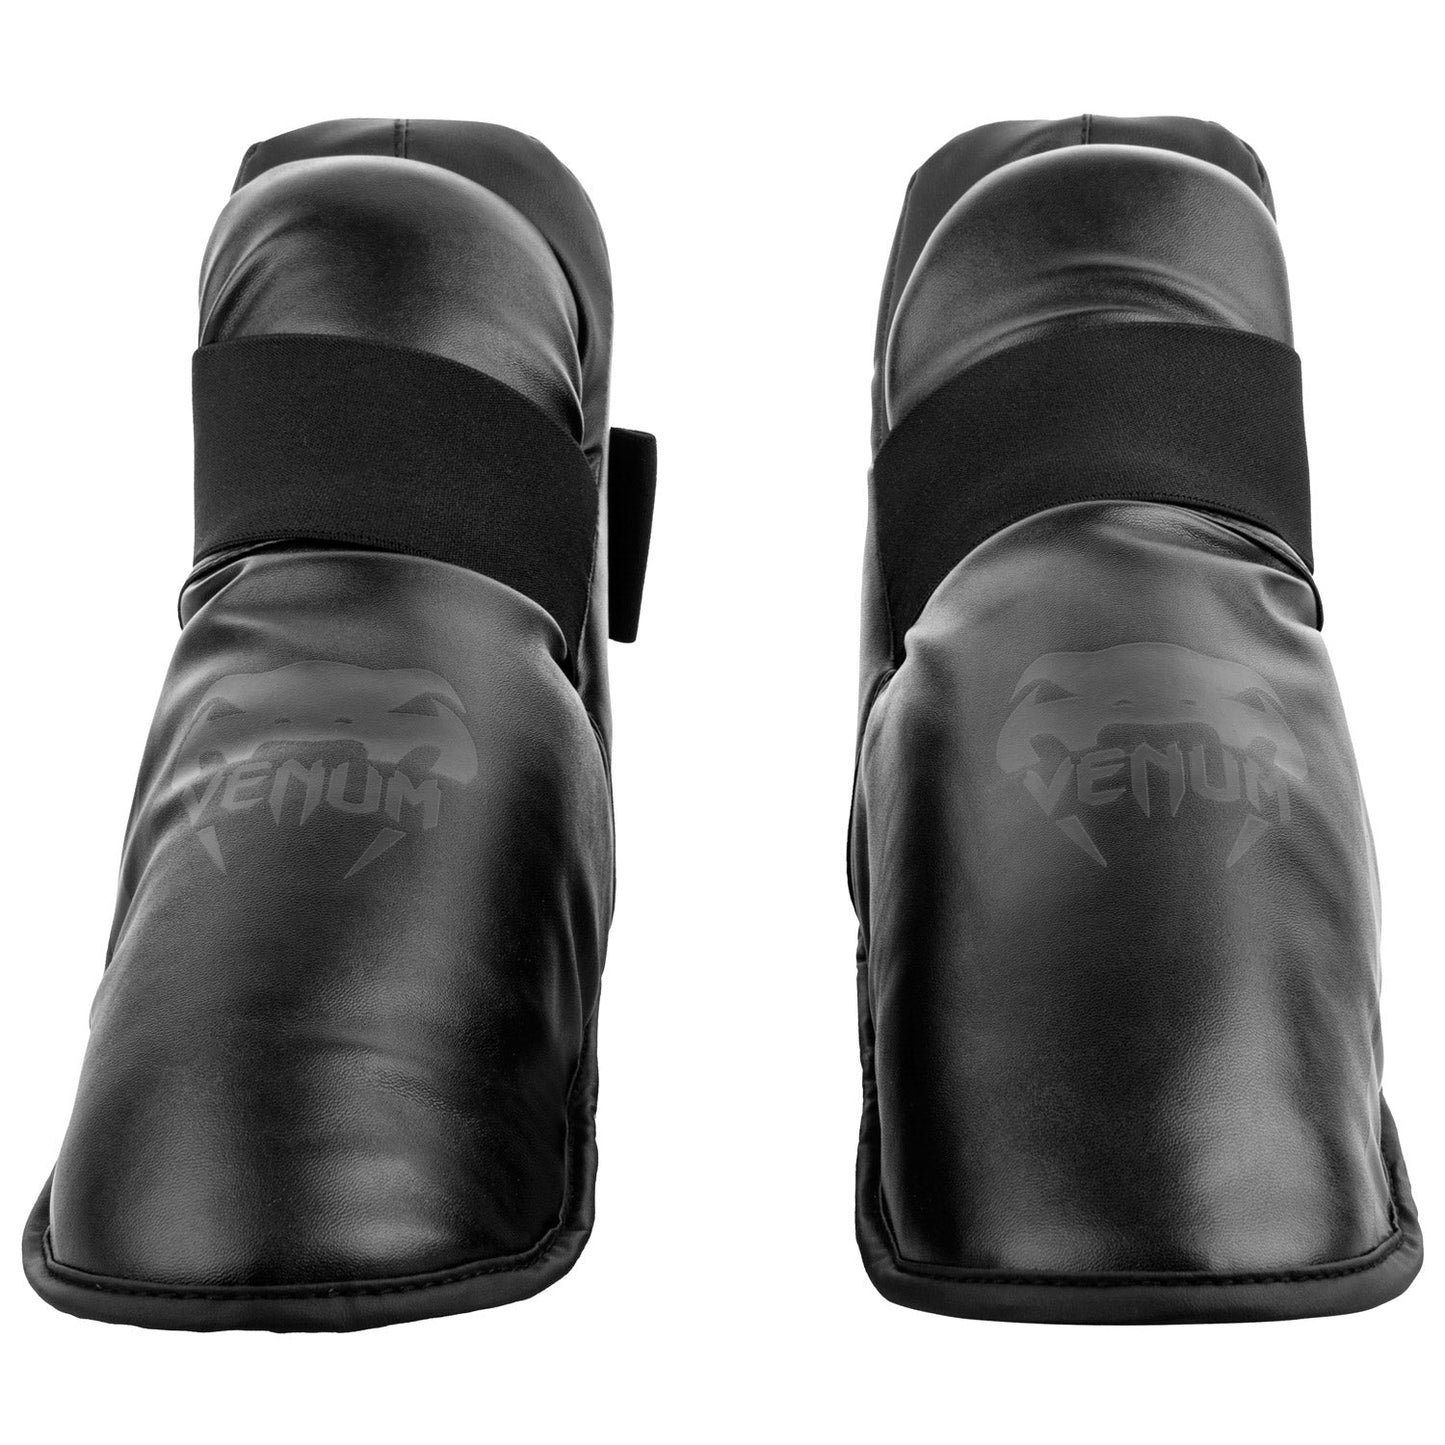 Venum Challenger Foot Gear - Black/Black